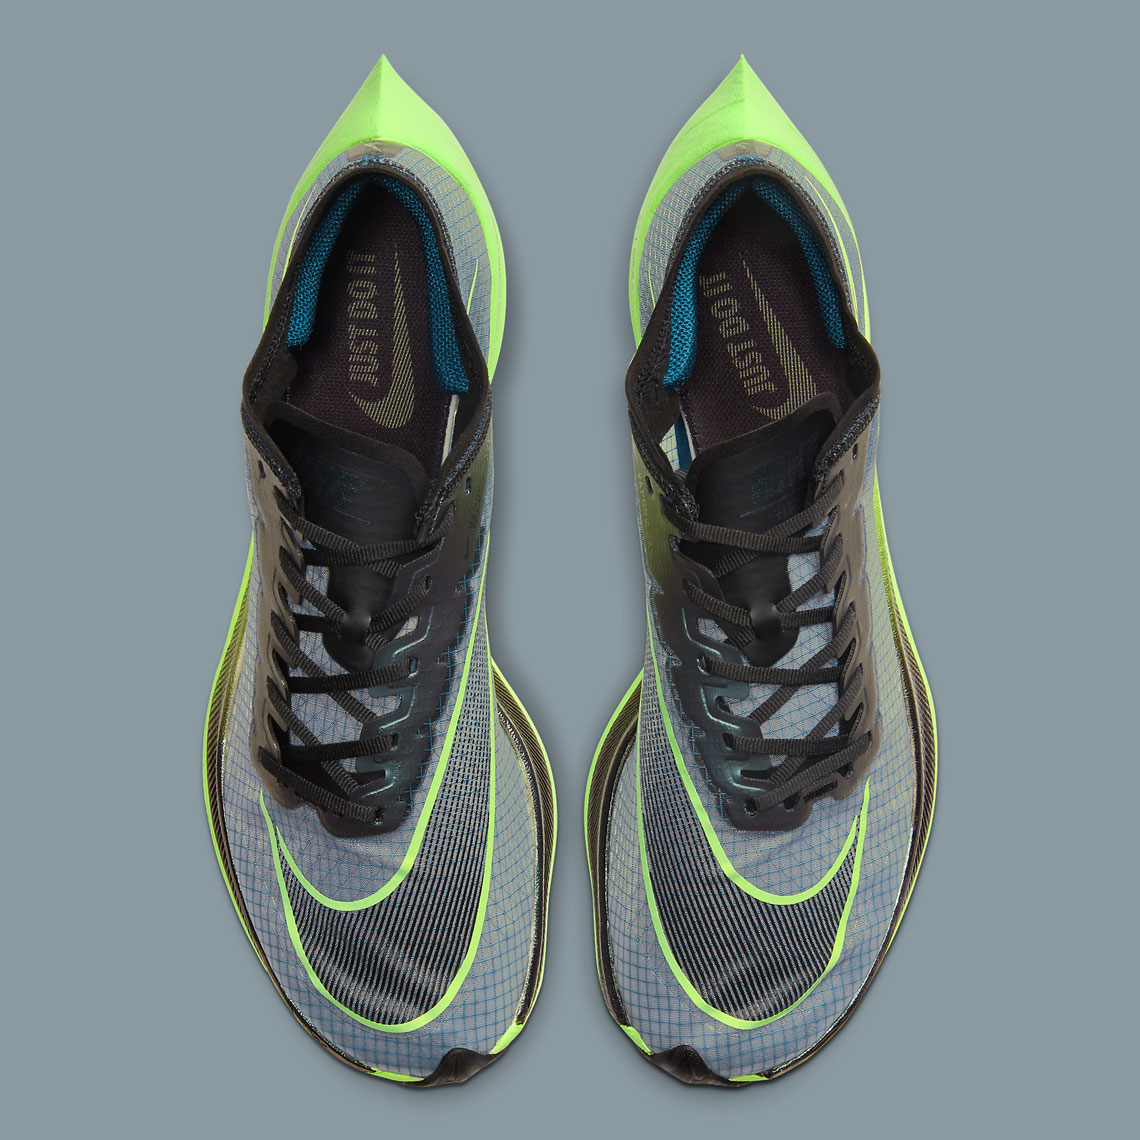 Nike ZoomX Vaporfly NEXT% AO4568-400 